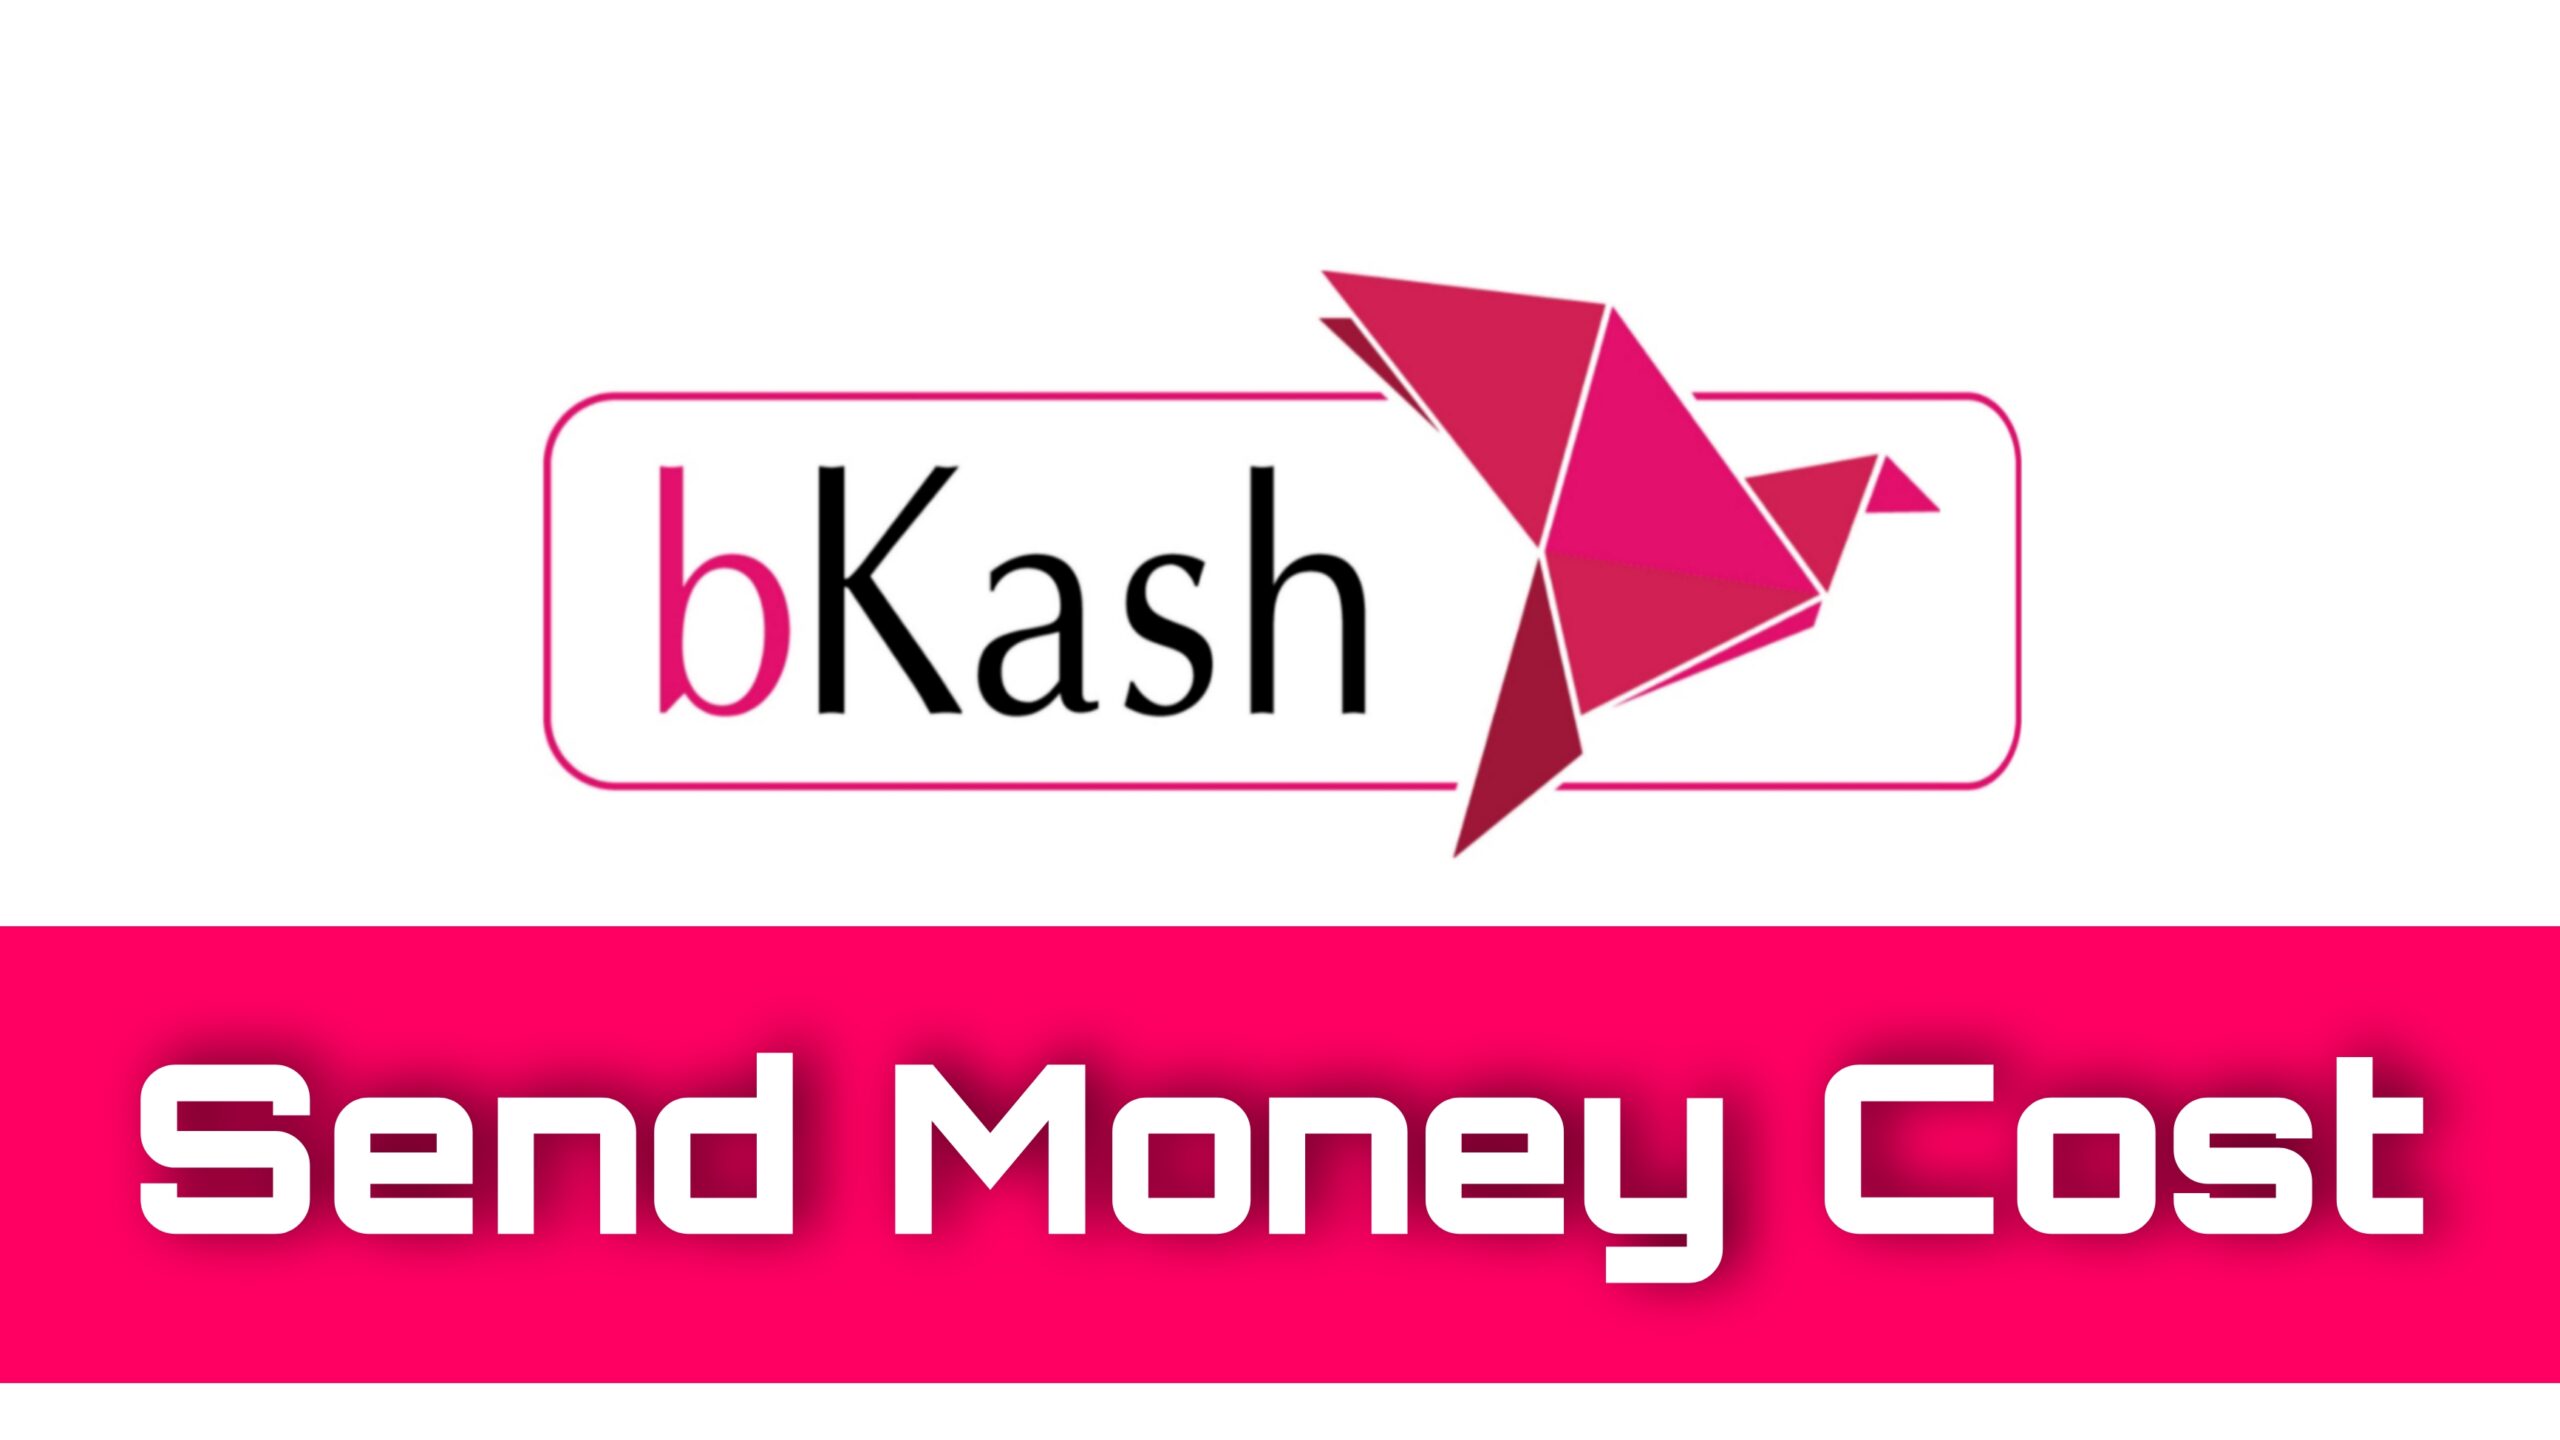 bkash send money cost